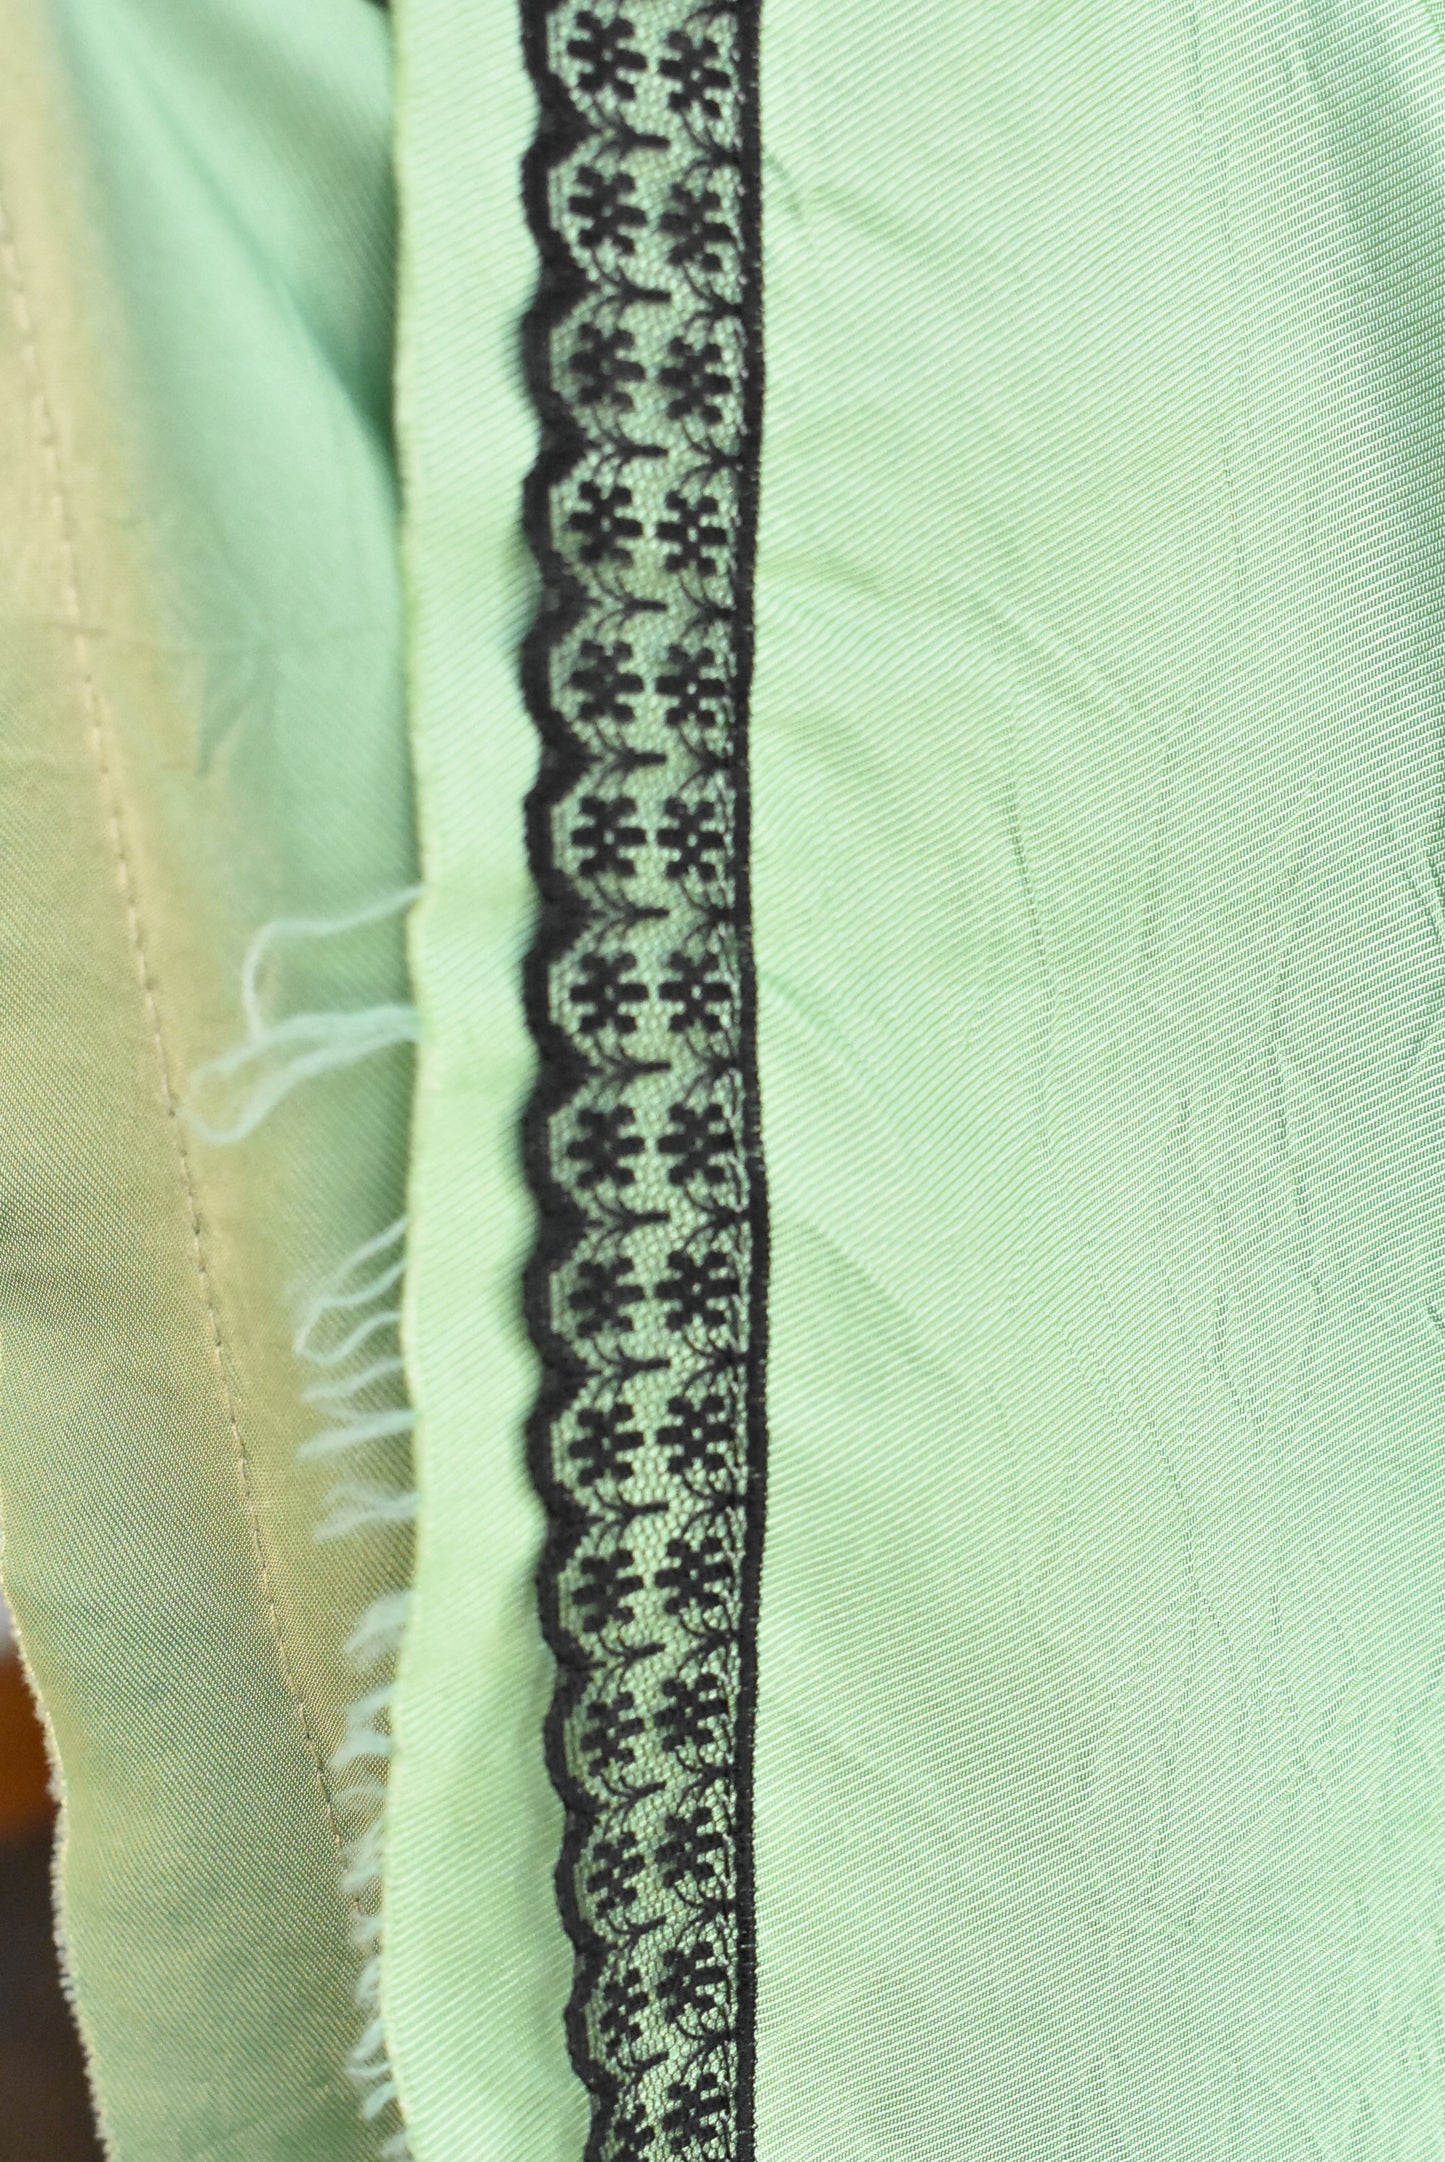 Caravan green lace-hemmed skirt/dress, size L